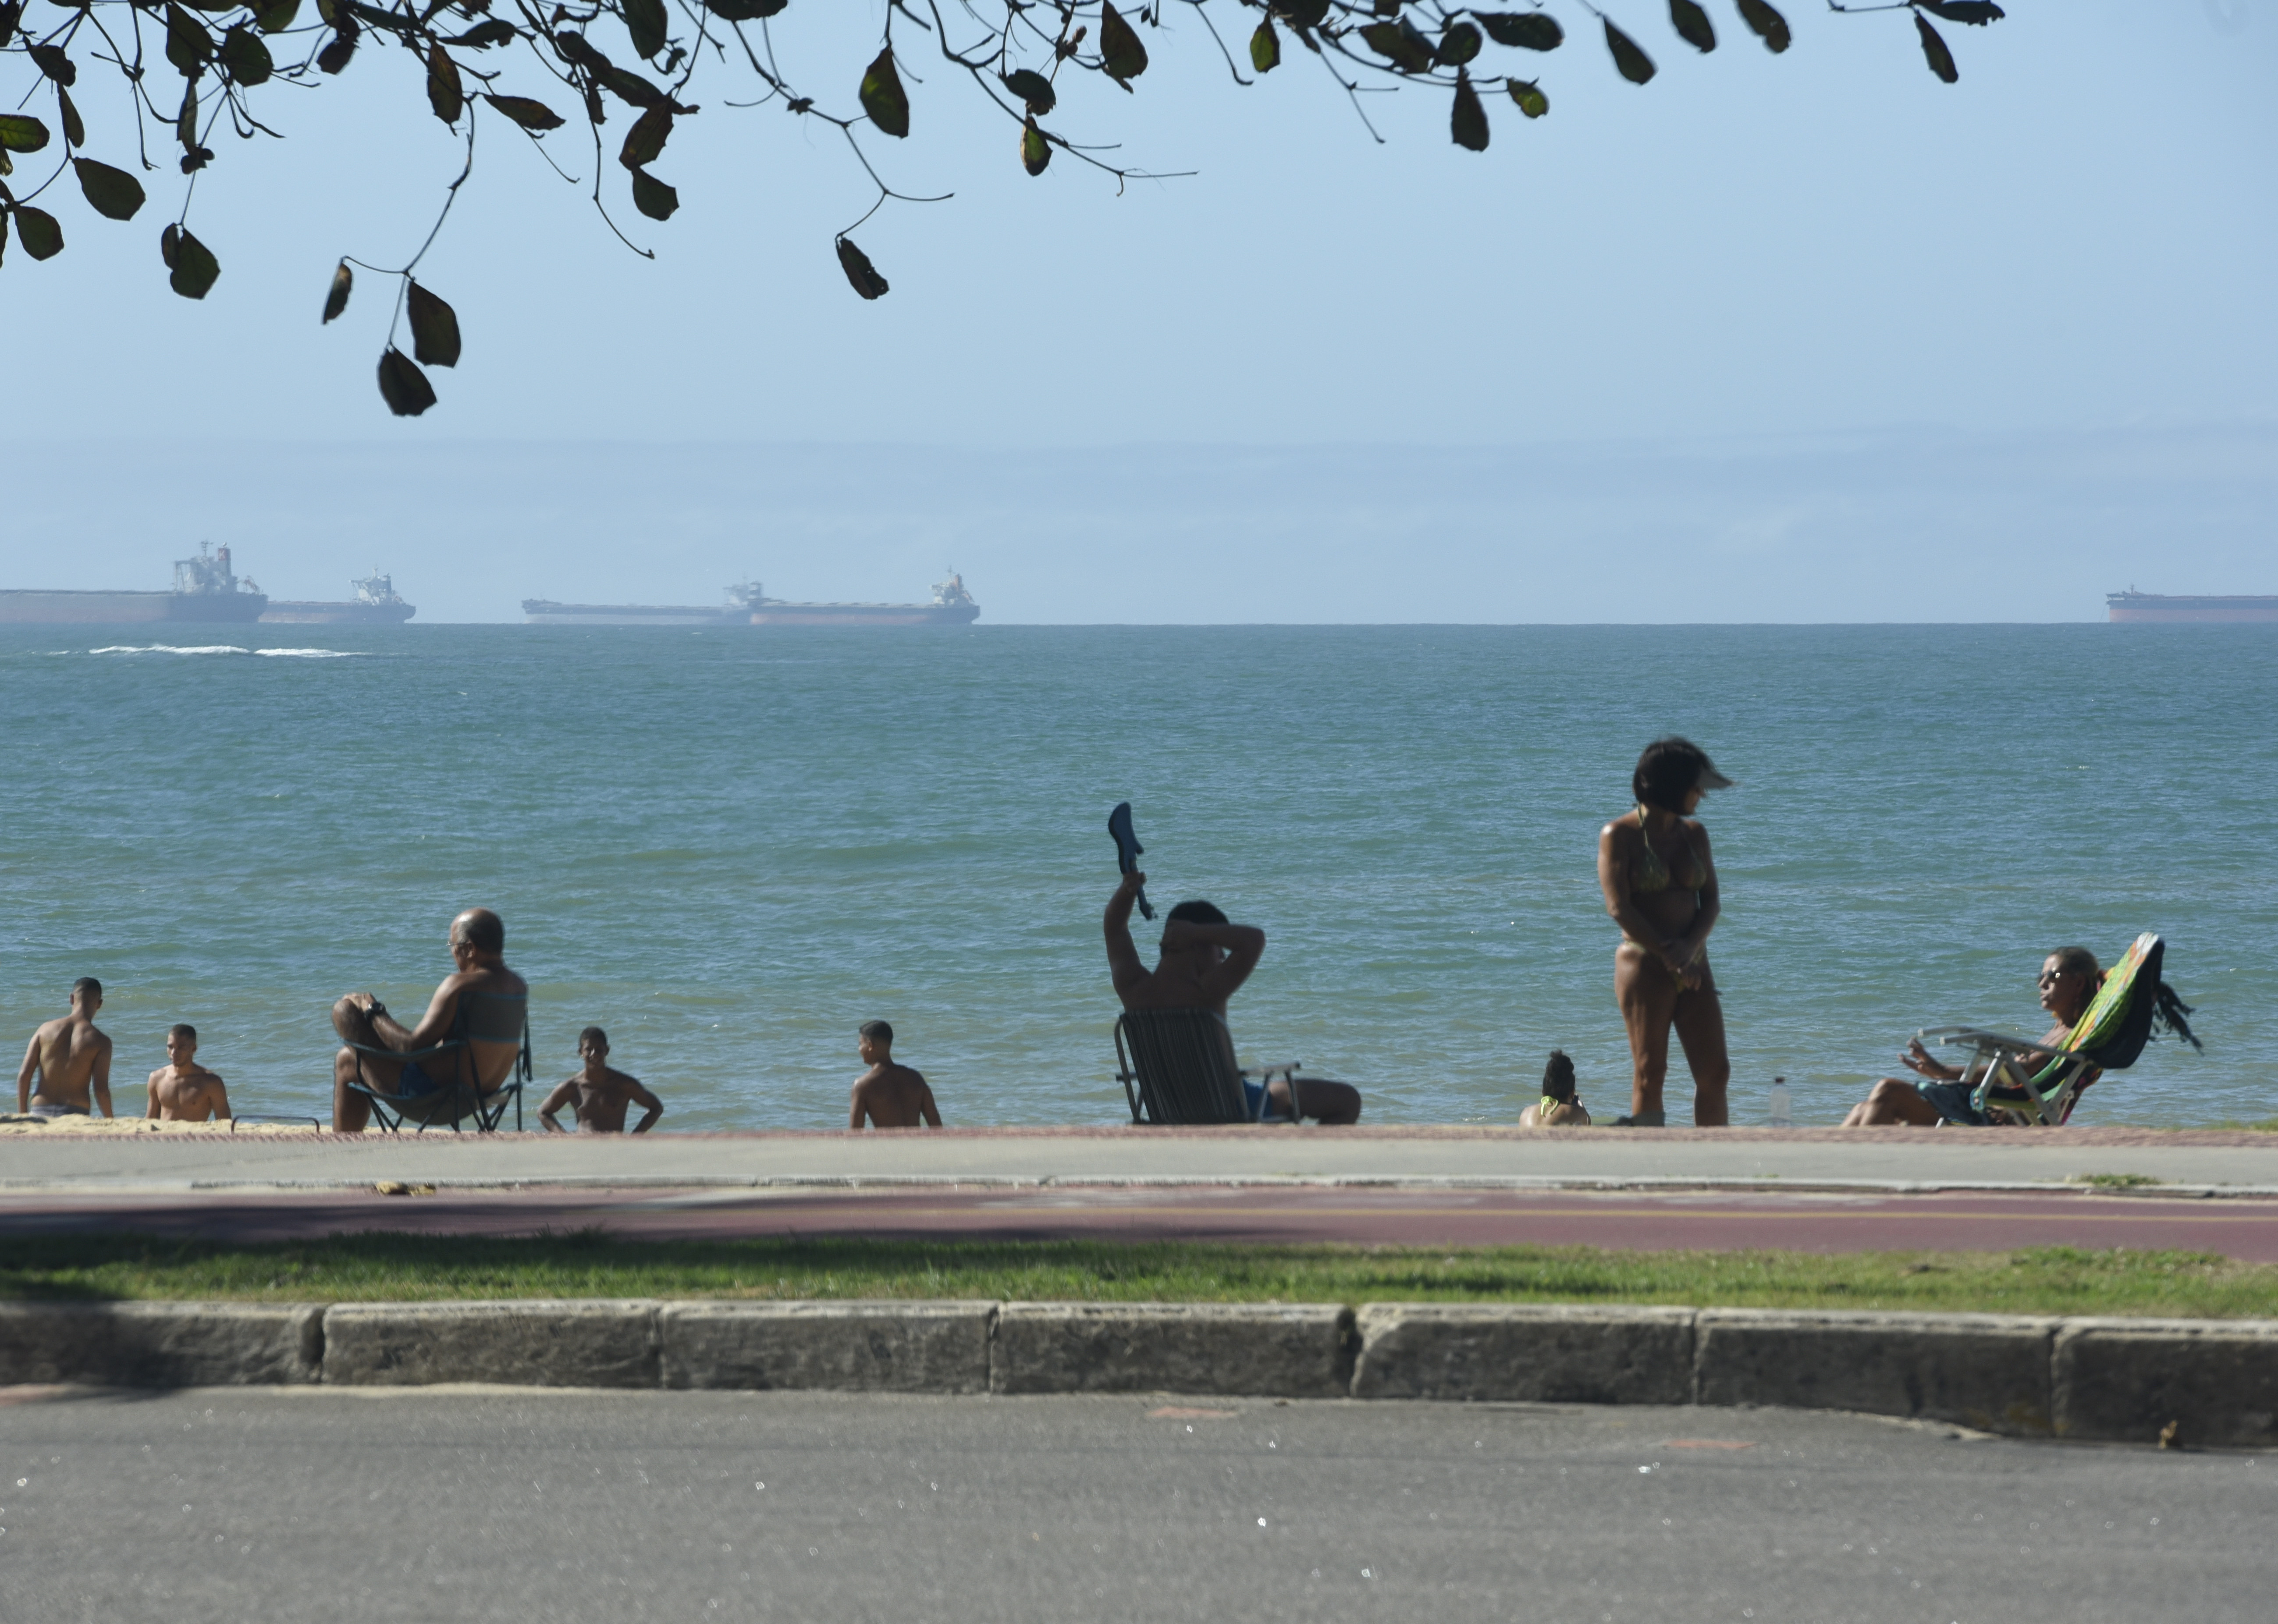 Movimento de pessoas durante a pandemia de Coronavírus na Praia de Itaparica, Vila Velha